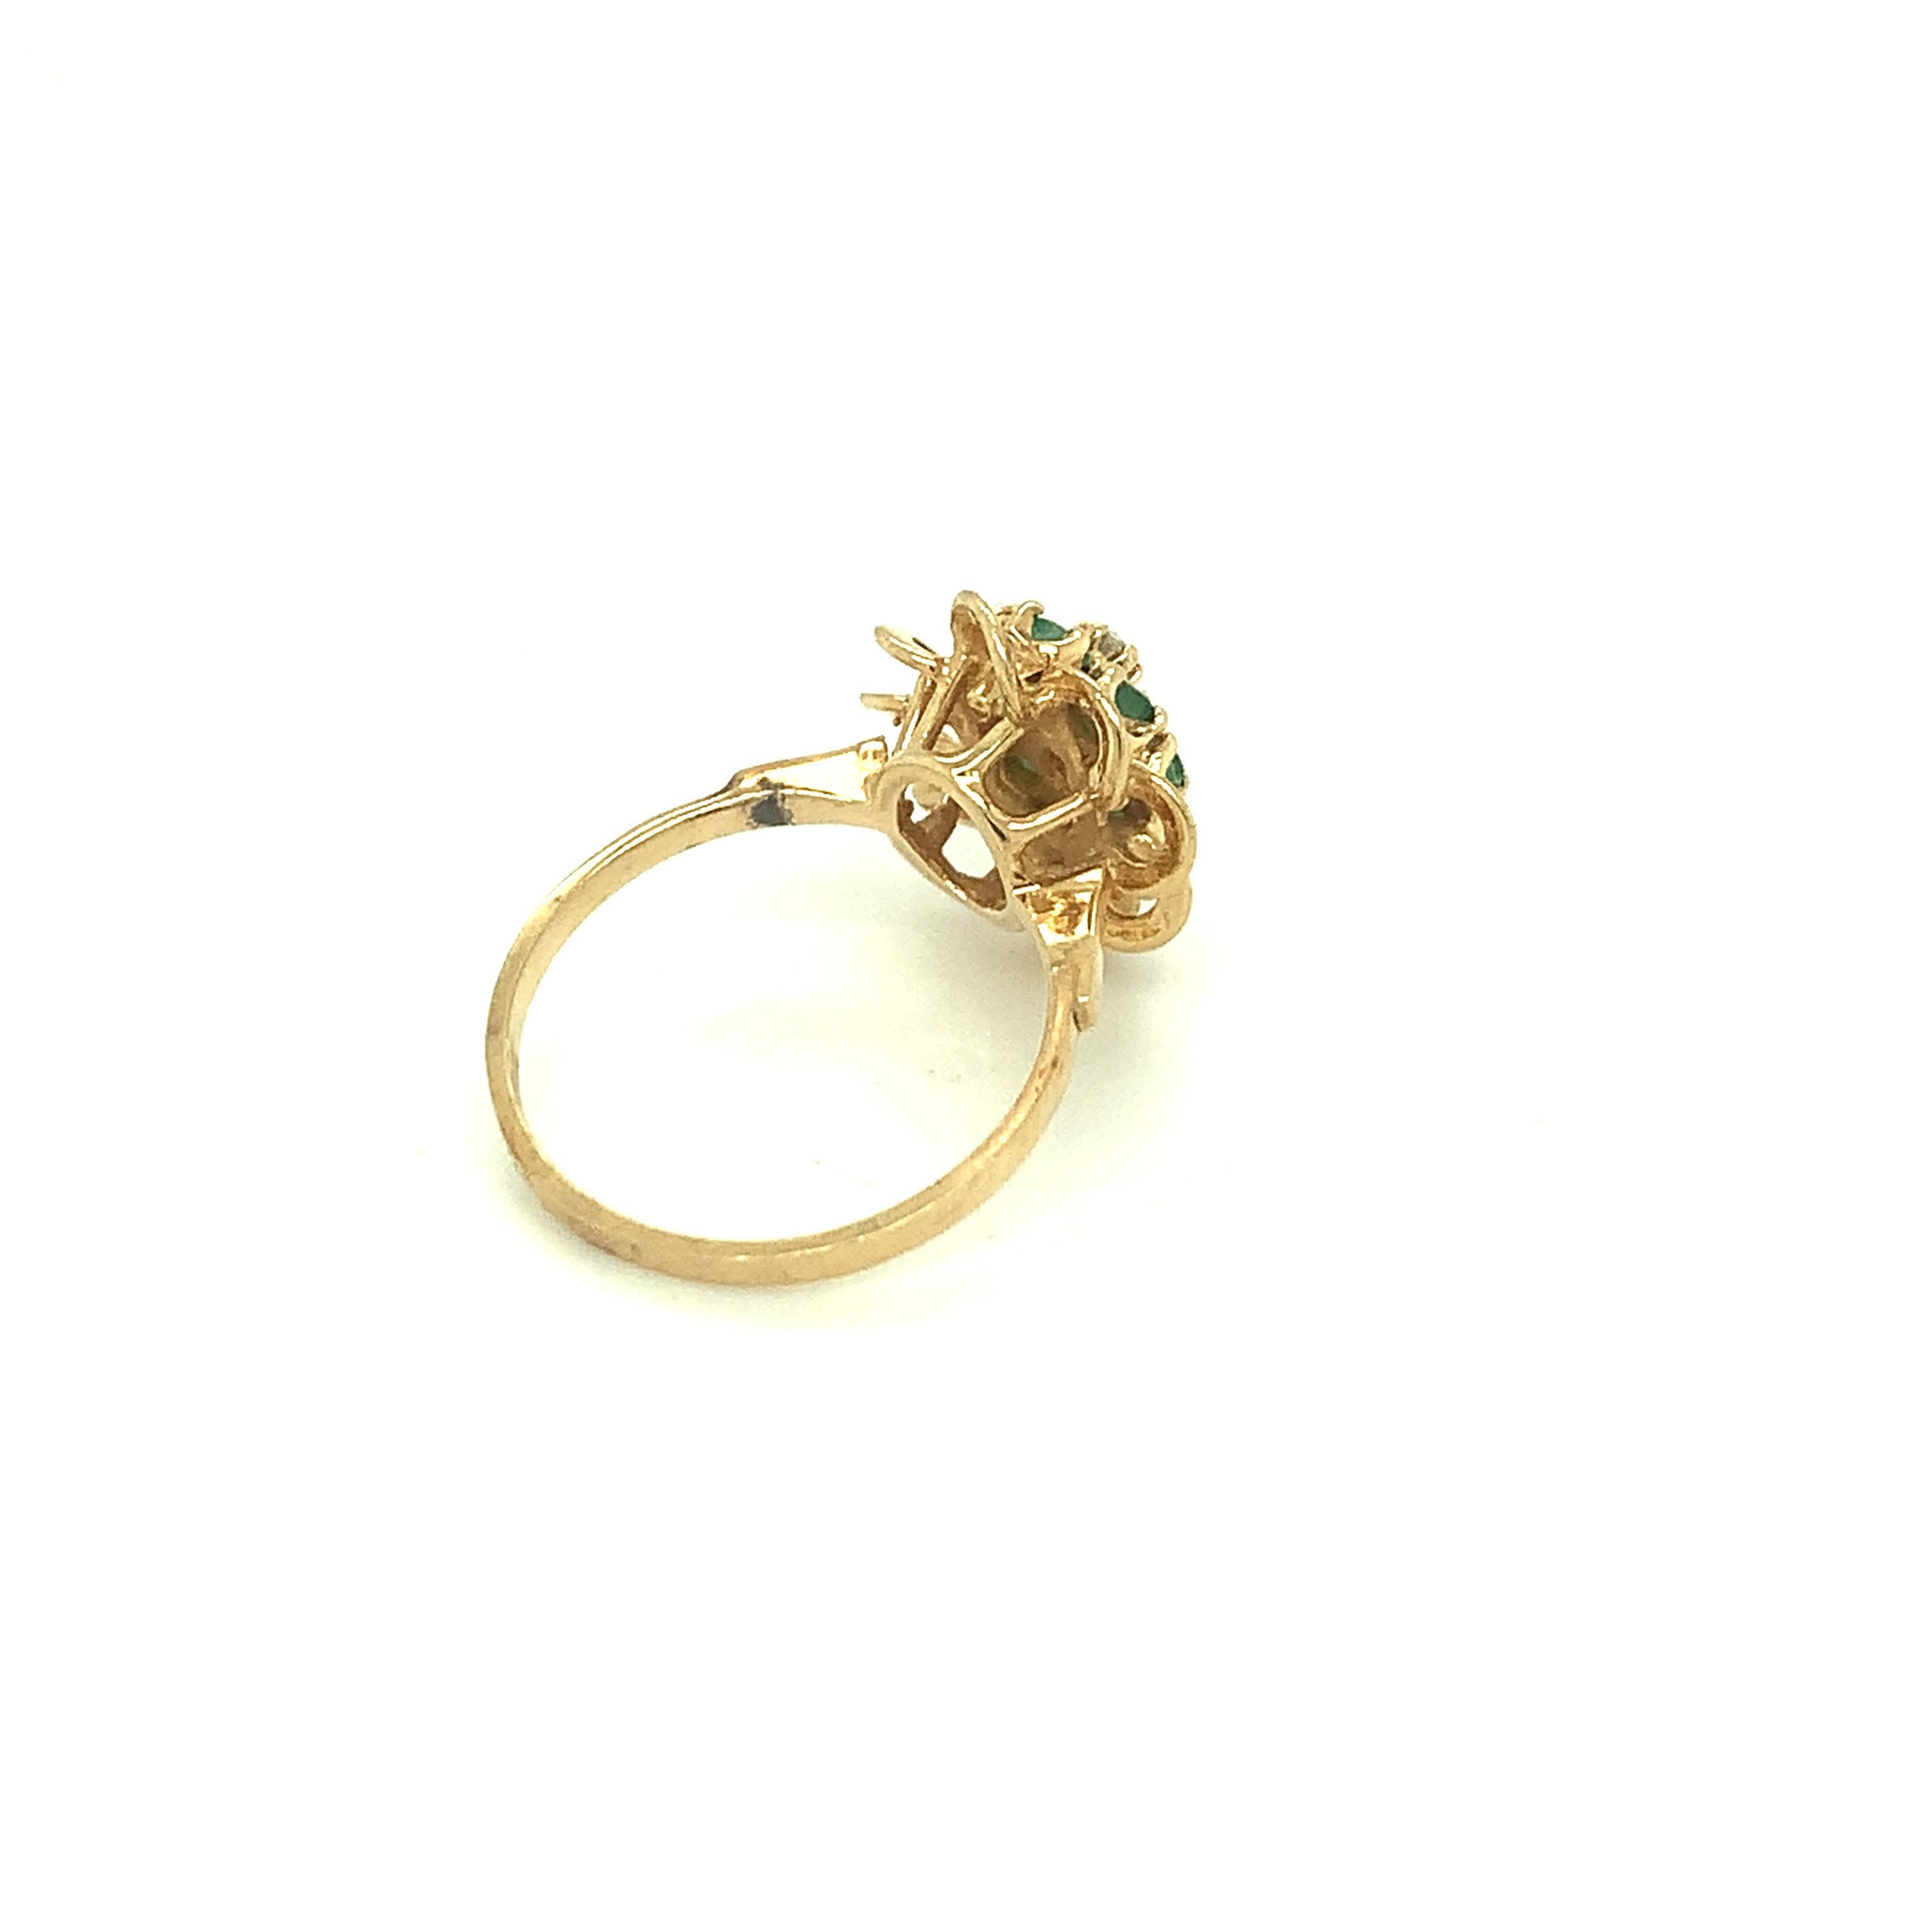 Brilliant Cut Emerald & Diamond Ring Set in 14K Yellow Gold For Sale